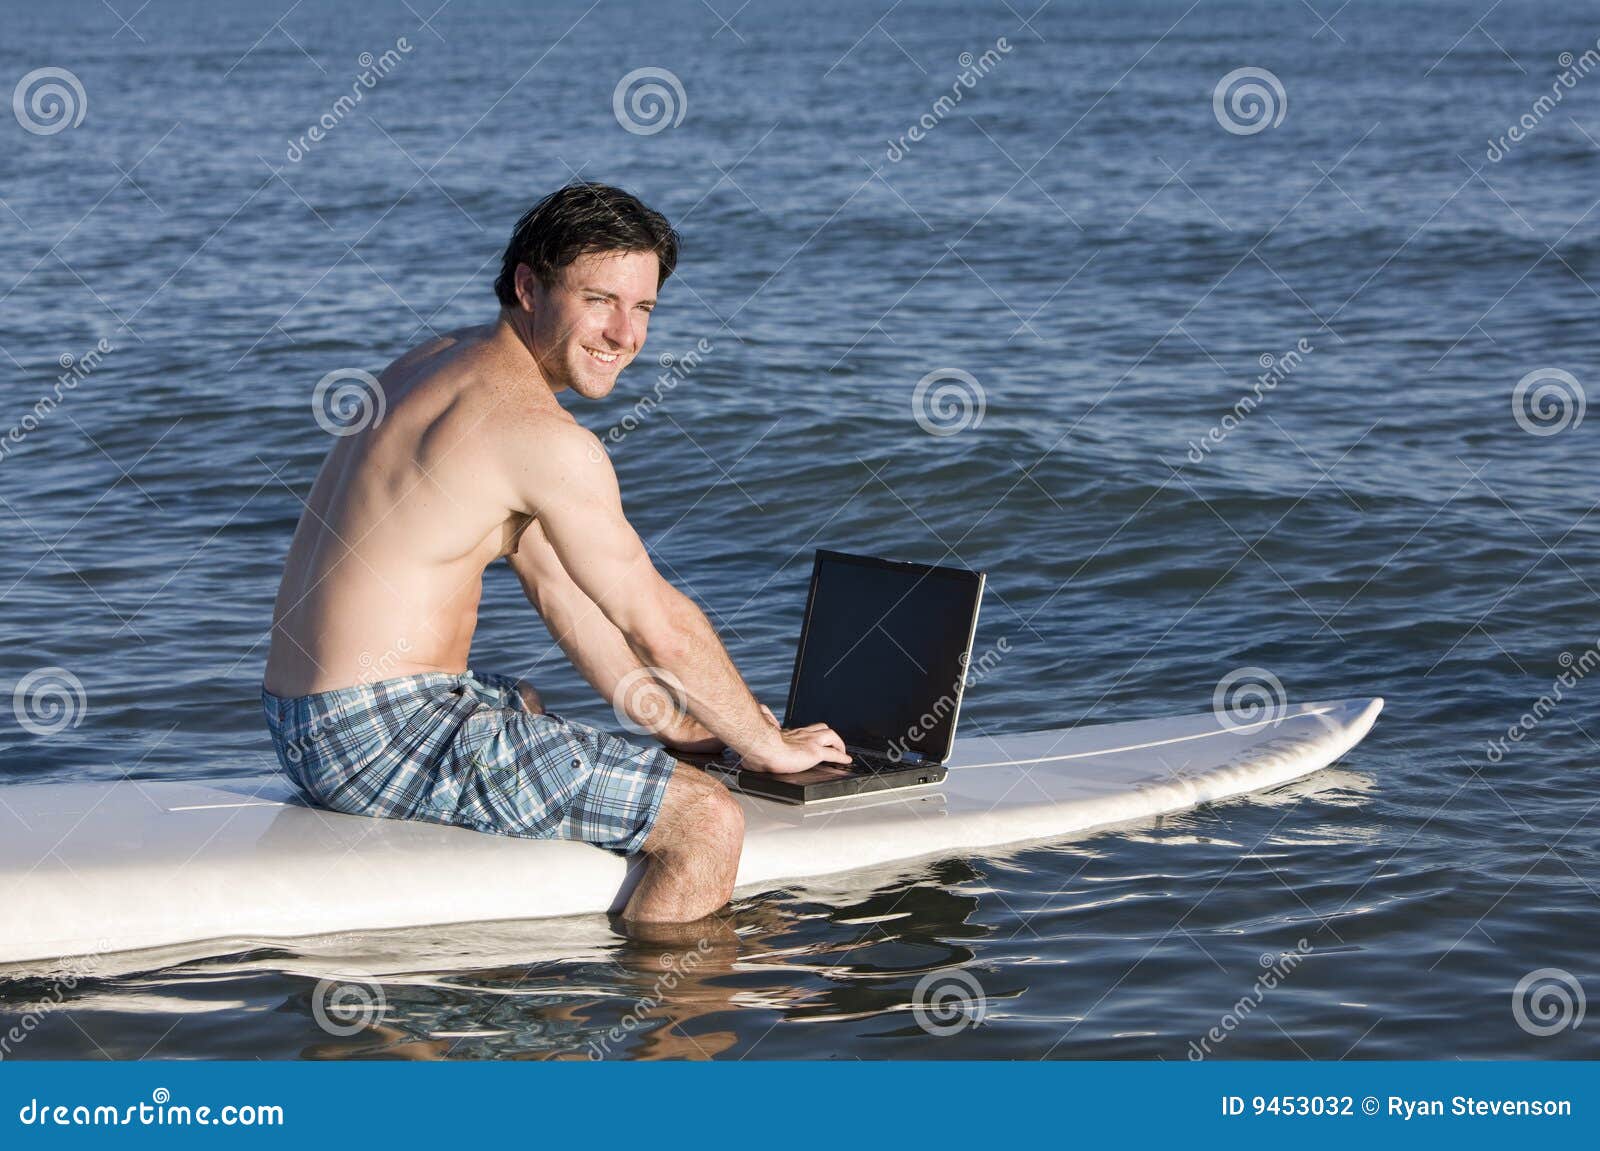 Surfing the internet is. С ноутбуком на серфе. Человек с ноутбуком на серфинге. Интернет серфер. Серфер с ноутбуков.